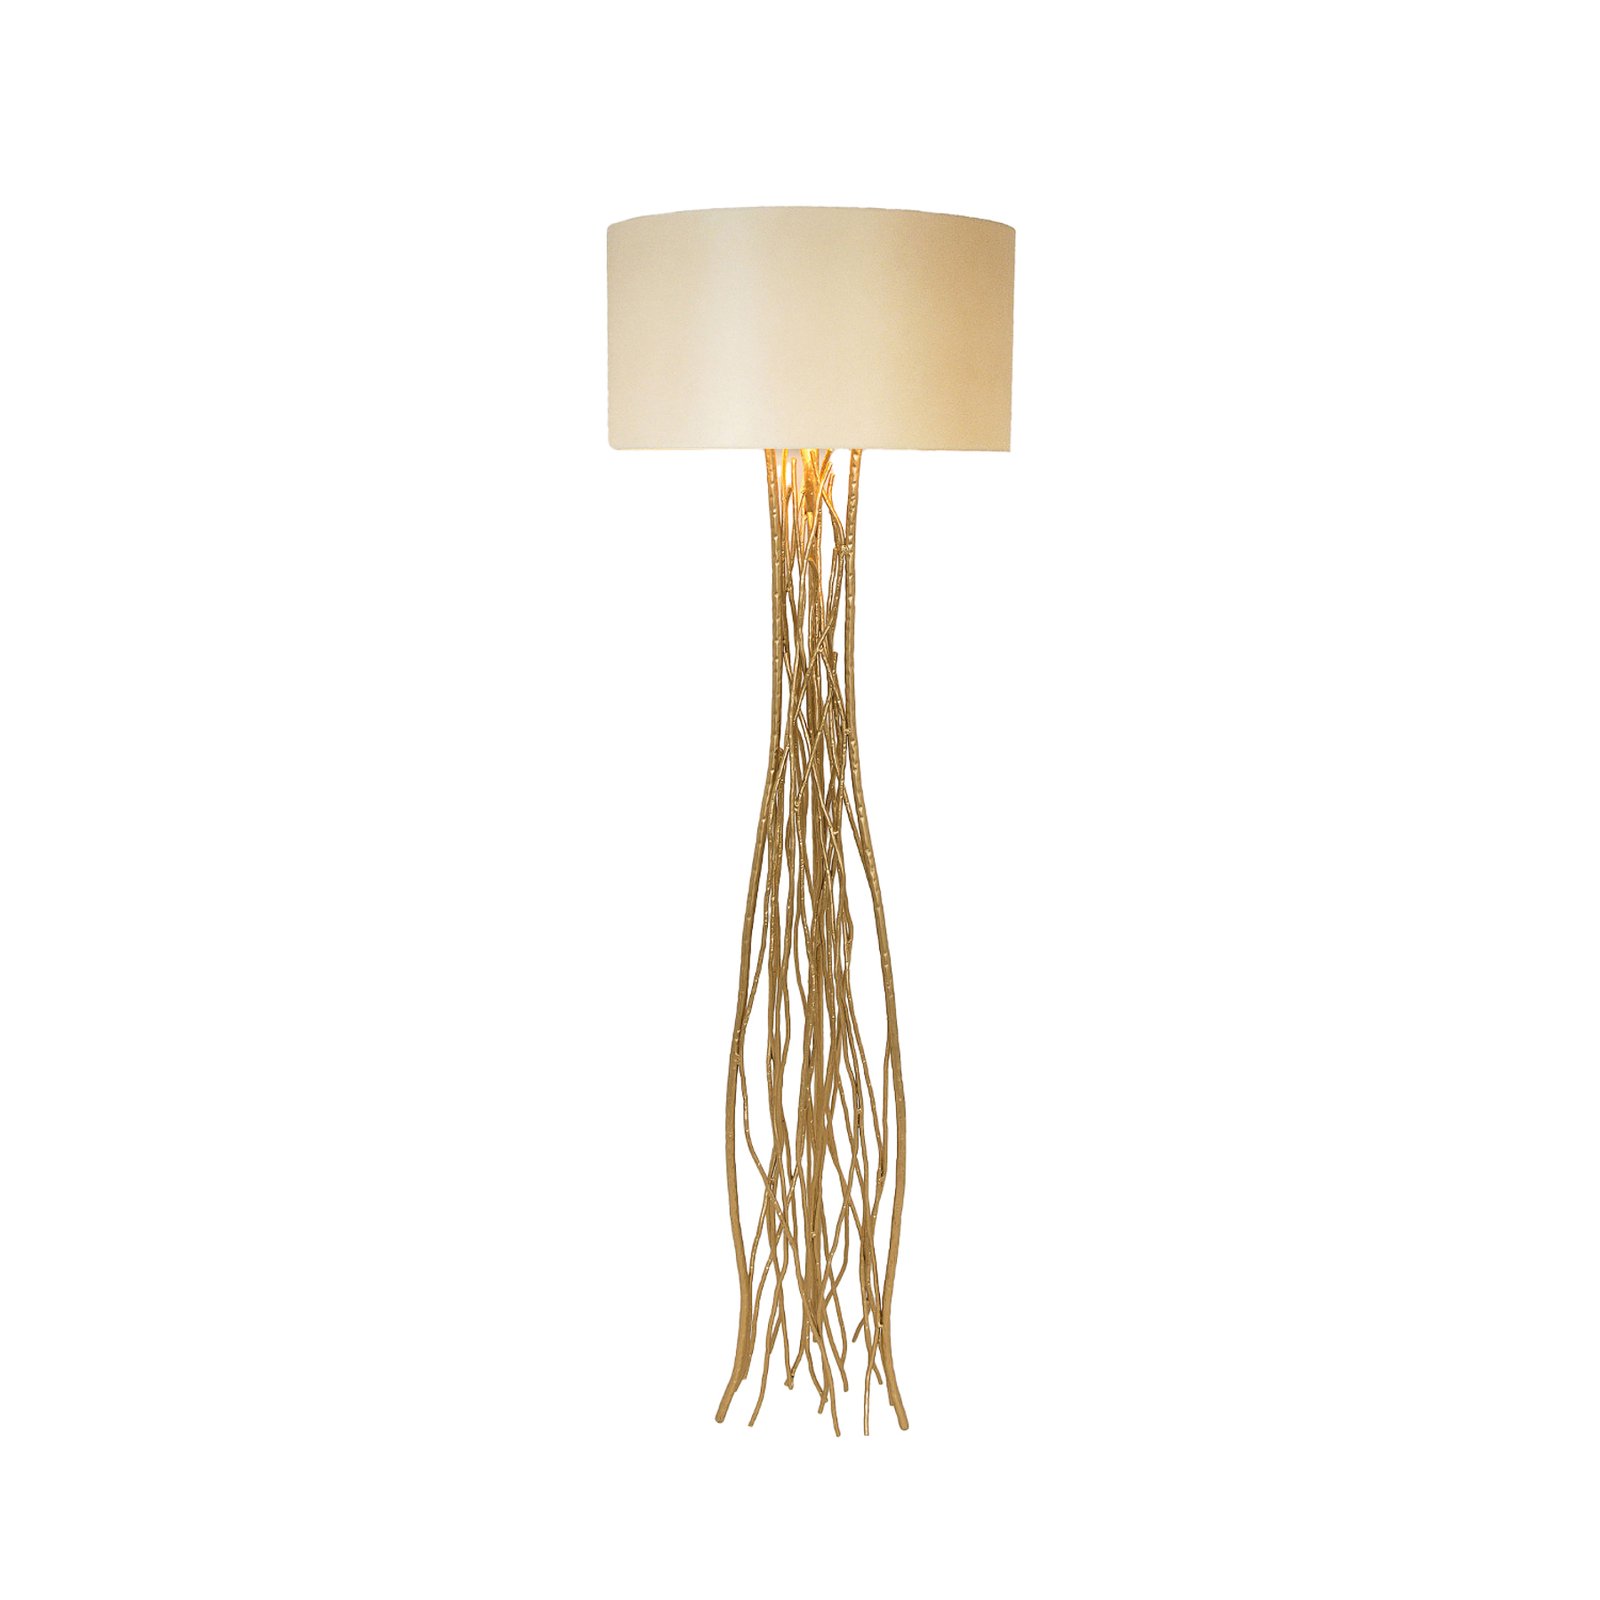 Capri floor lamp, gold/ecru, height 155 cm, hammered iron